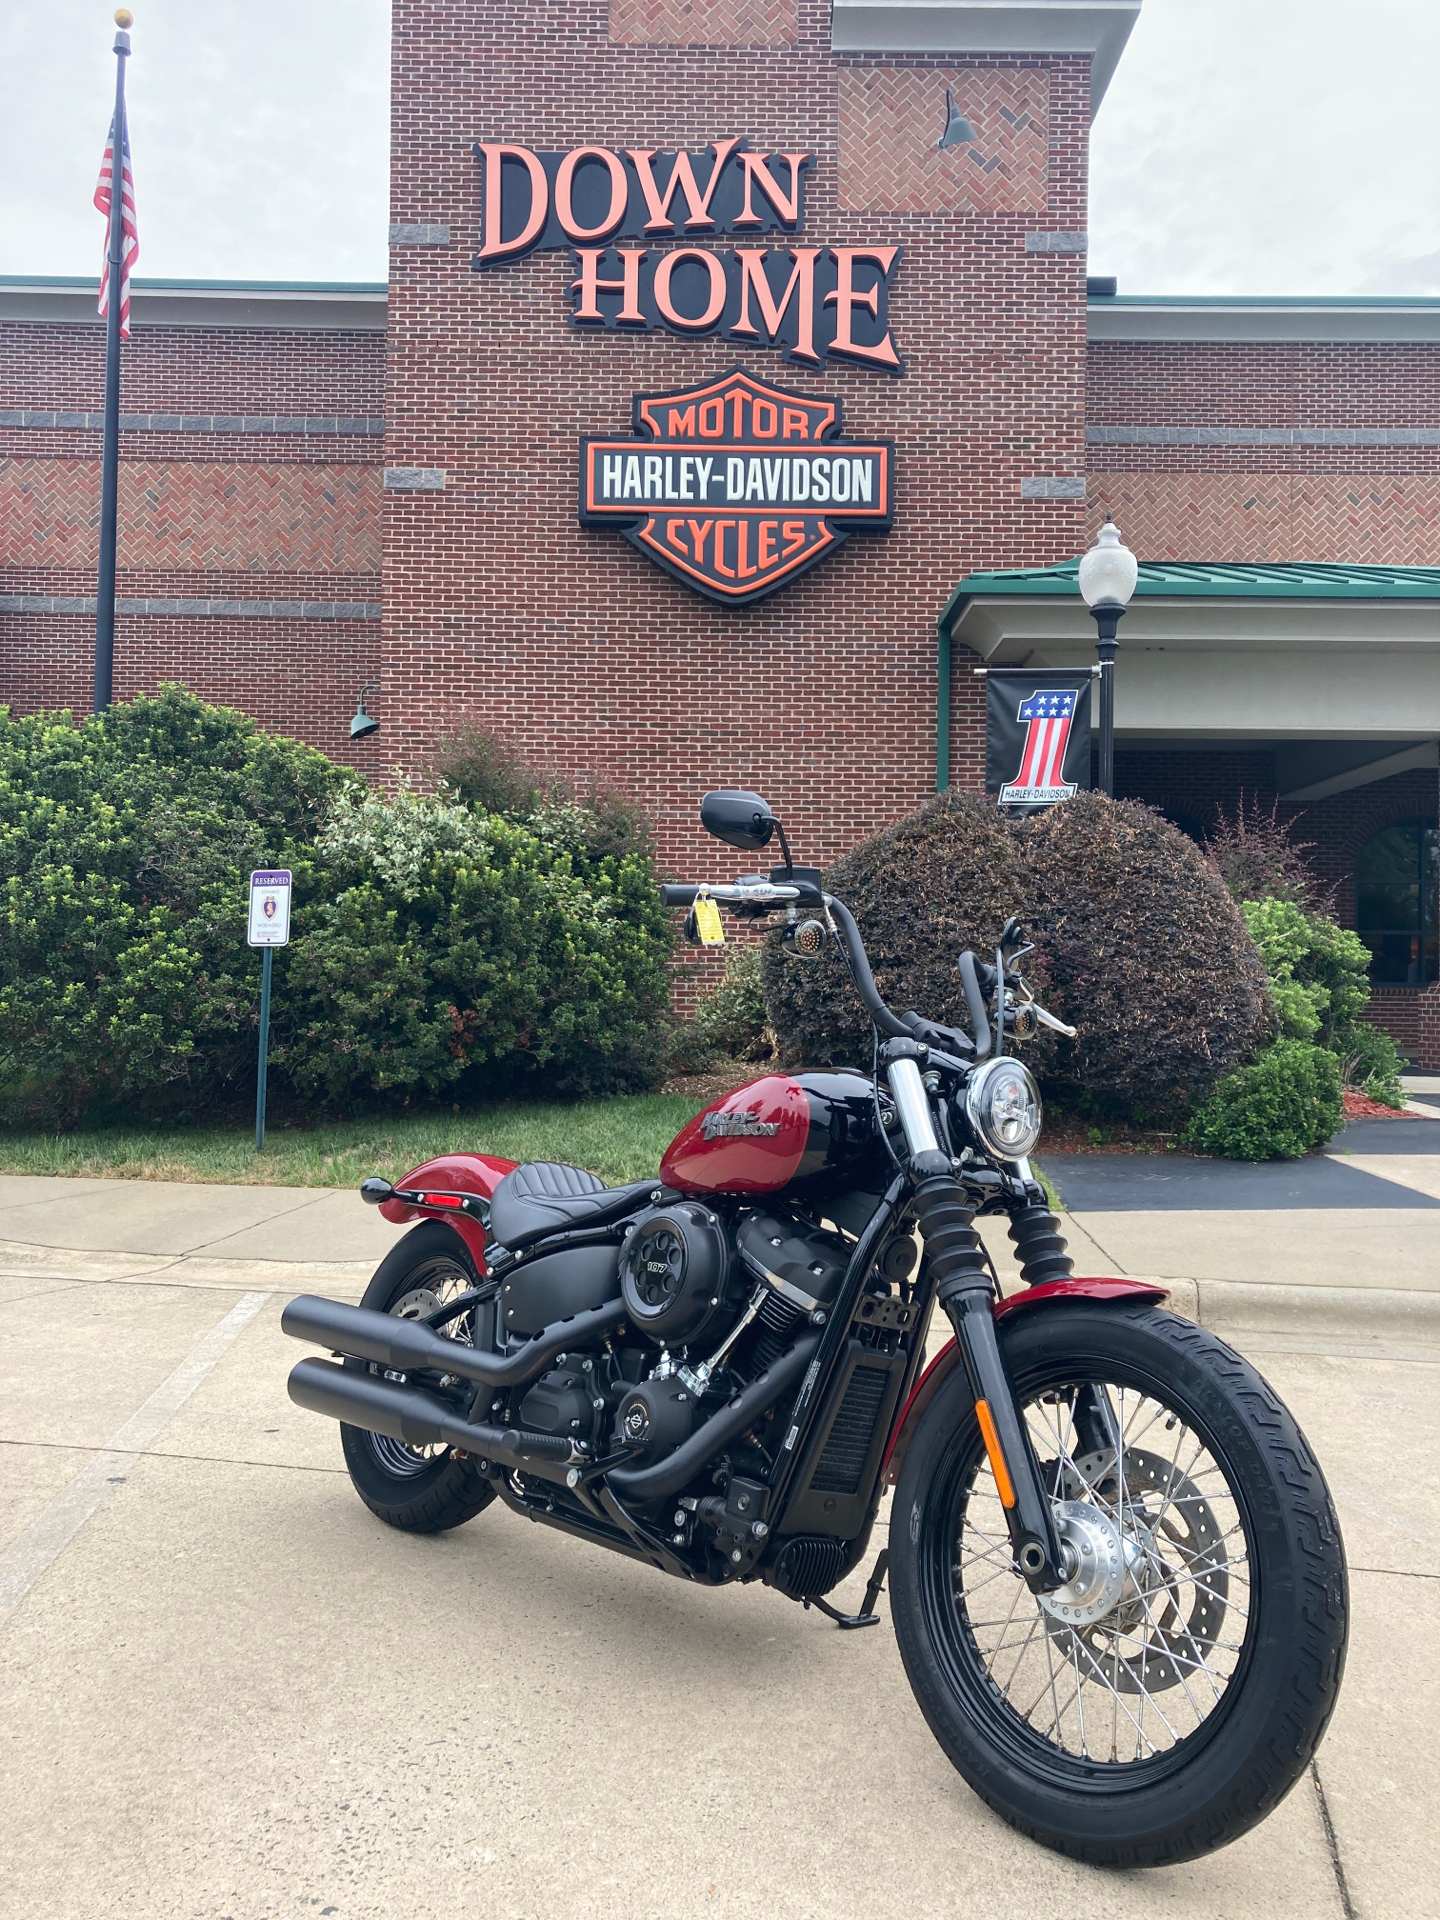 2020 Harley-Davidson Street Bob® in Burlington, North Carolina - Photo 4